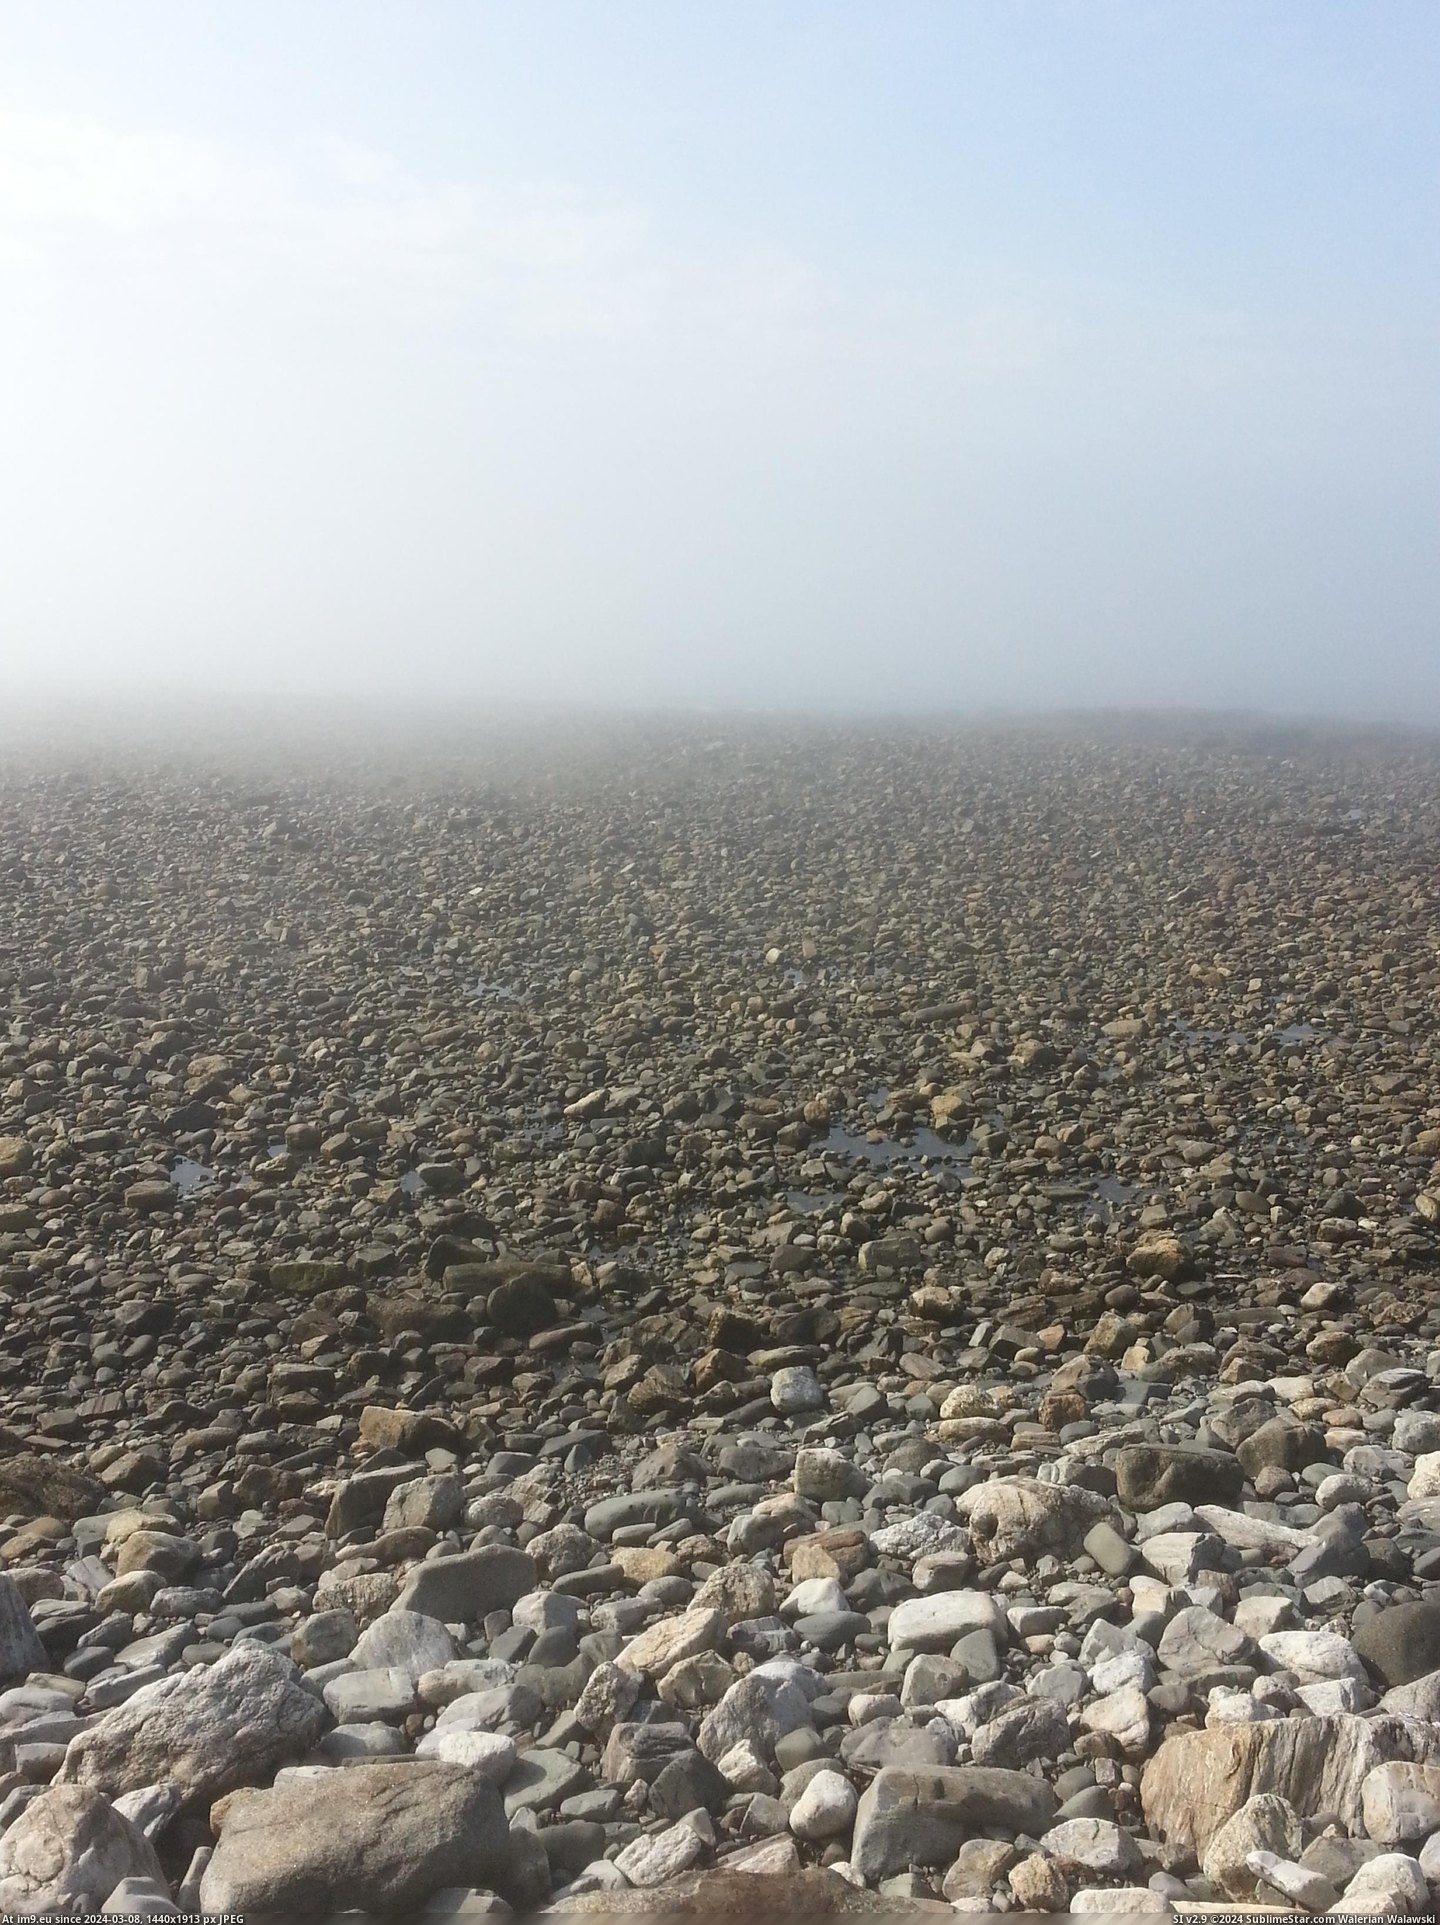 #Ocean #Fog #Beverley #2448x3264 #Hides [Earthporn] Fog hides the ocean - outside Beverley, MA [2448x3264] [OC] Pic. (Изображение из альбом My r/EARTHPORN favs))